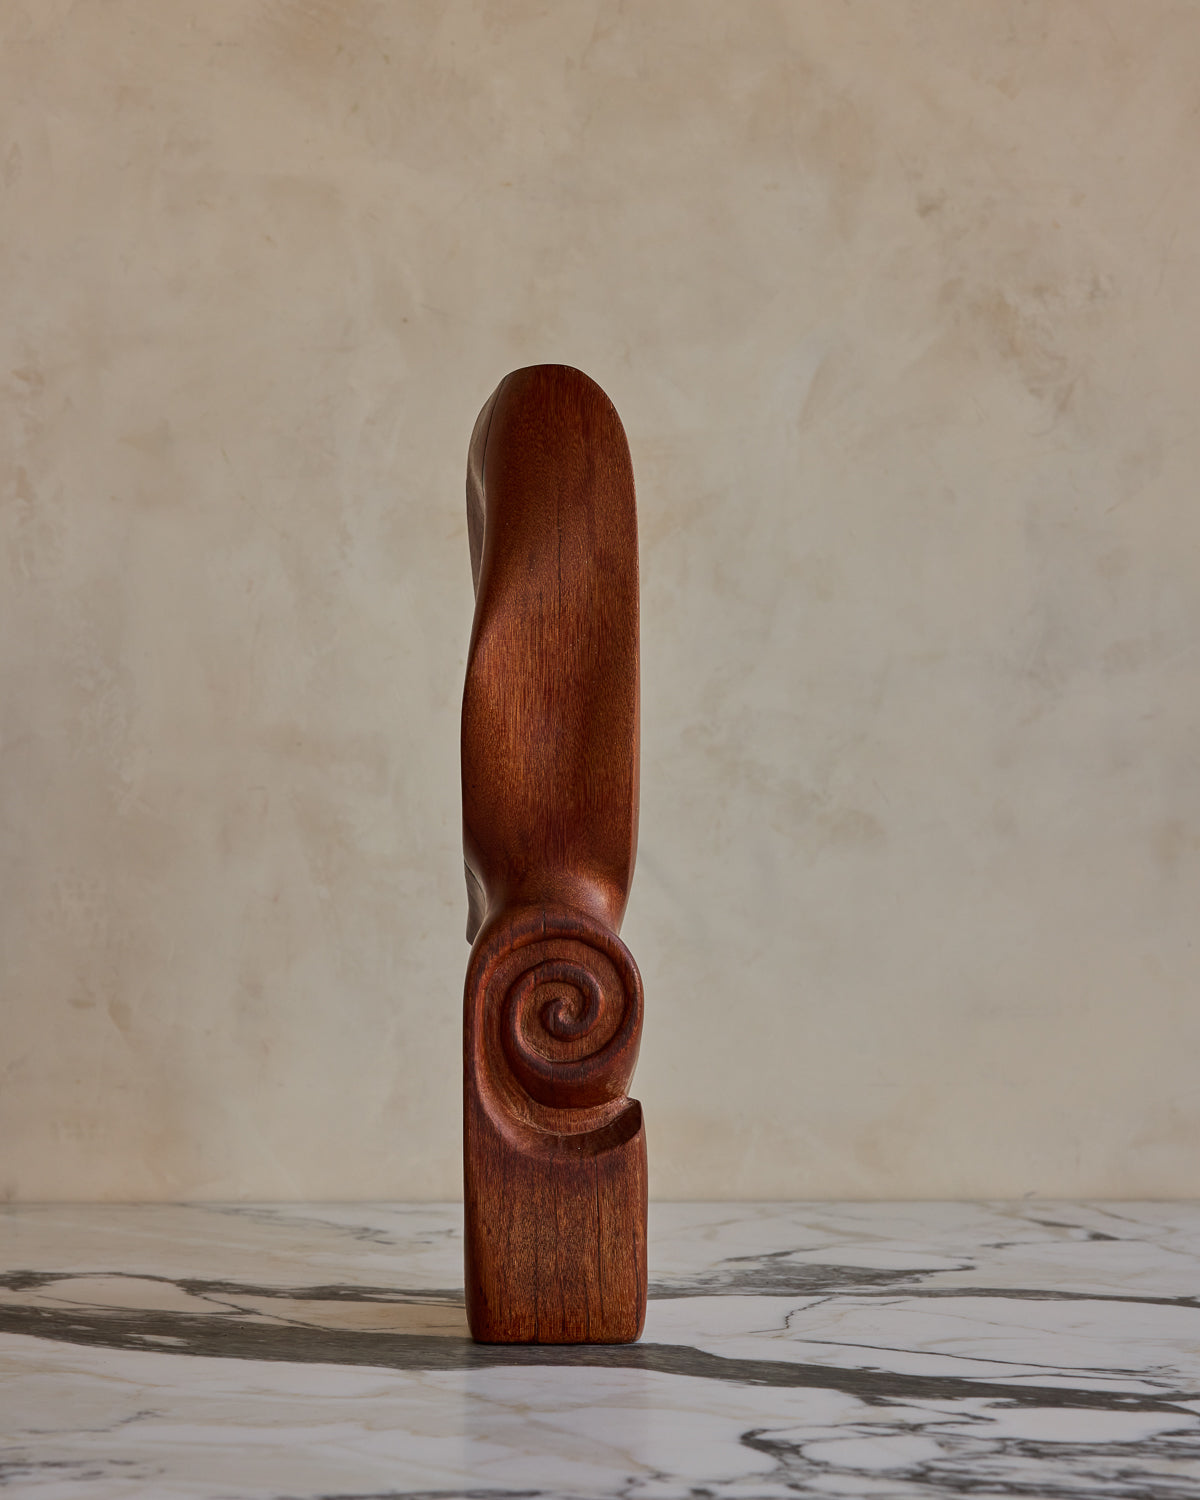 Fiddlehead Wooden Sculpture by Mario Orsogna